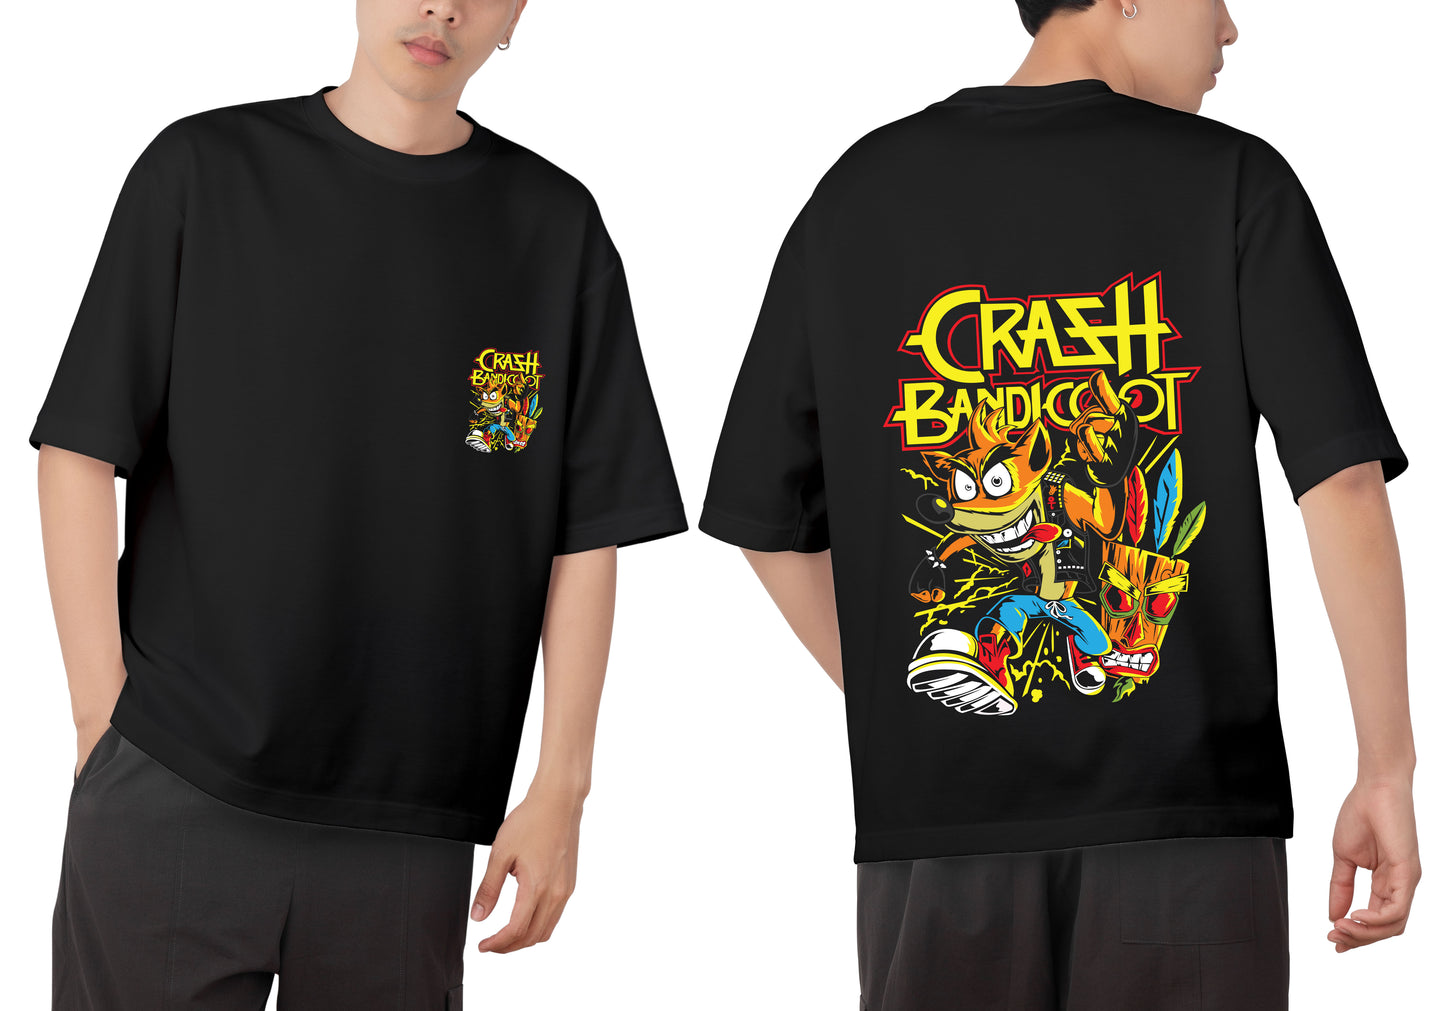 Crash Graphic Printed  Unisex Oversized T-shirt D006